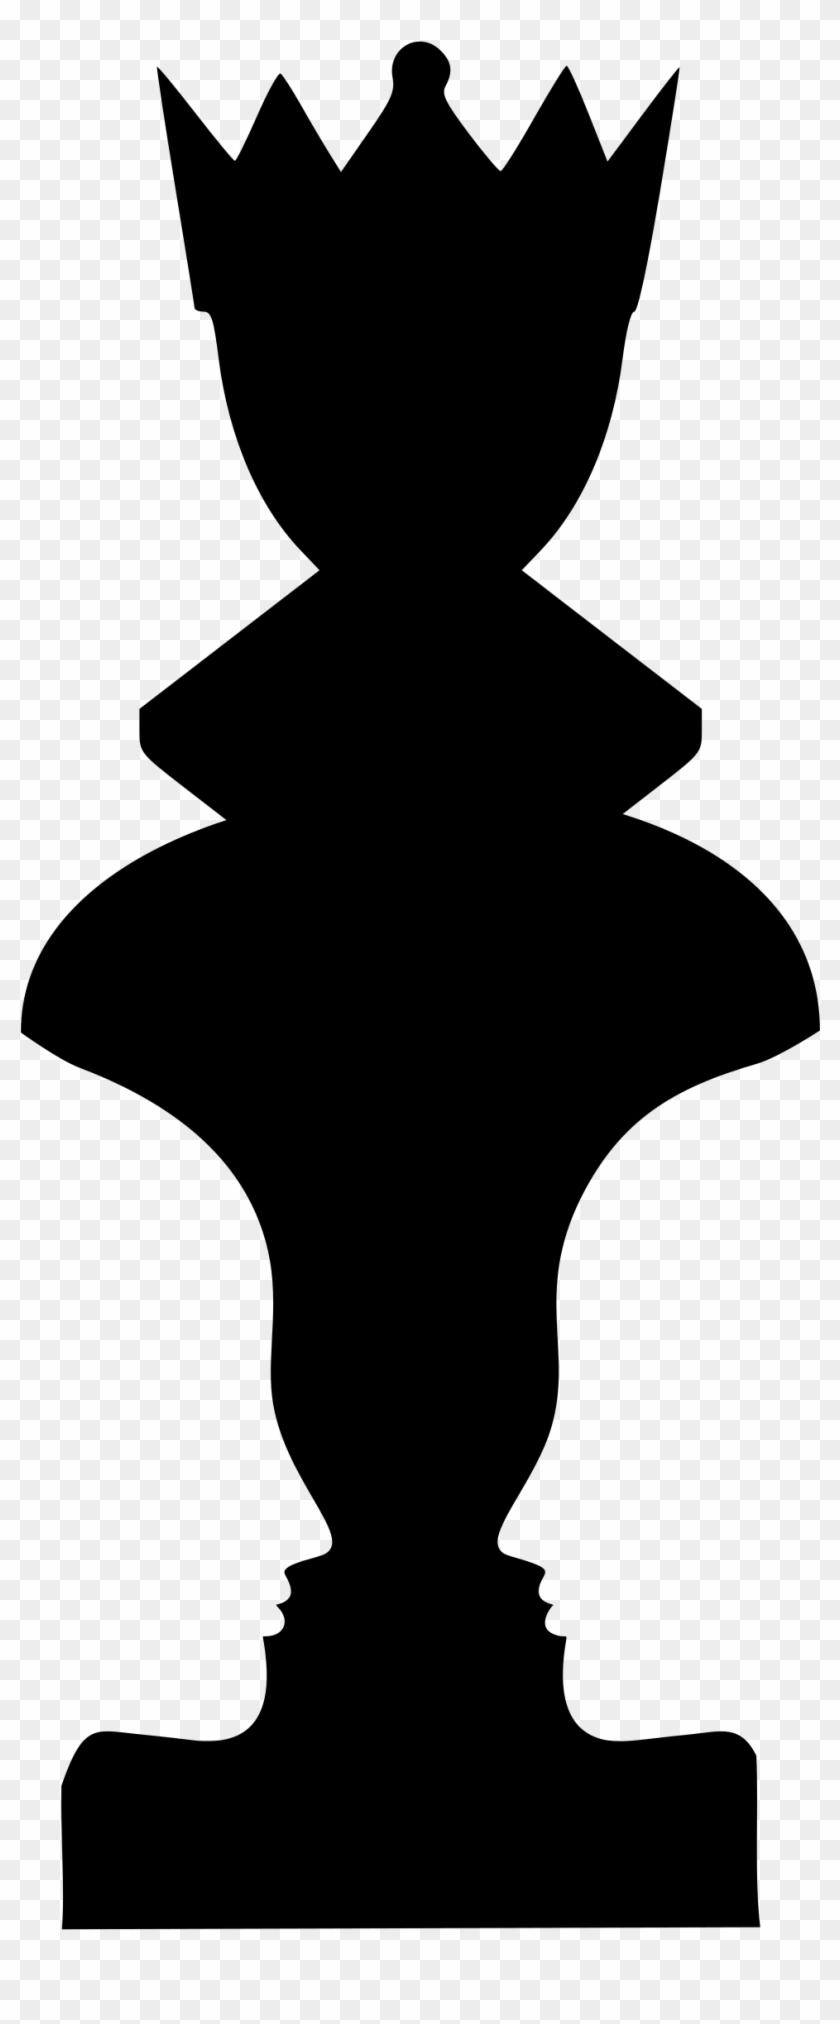 Clipart - Queen Chess Piece Silhouette #1418071